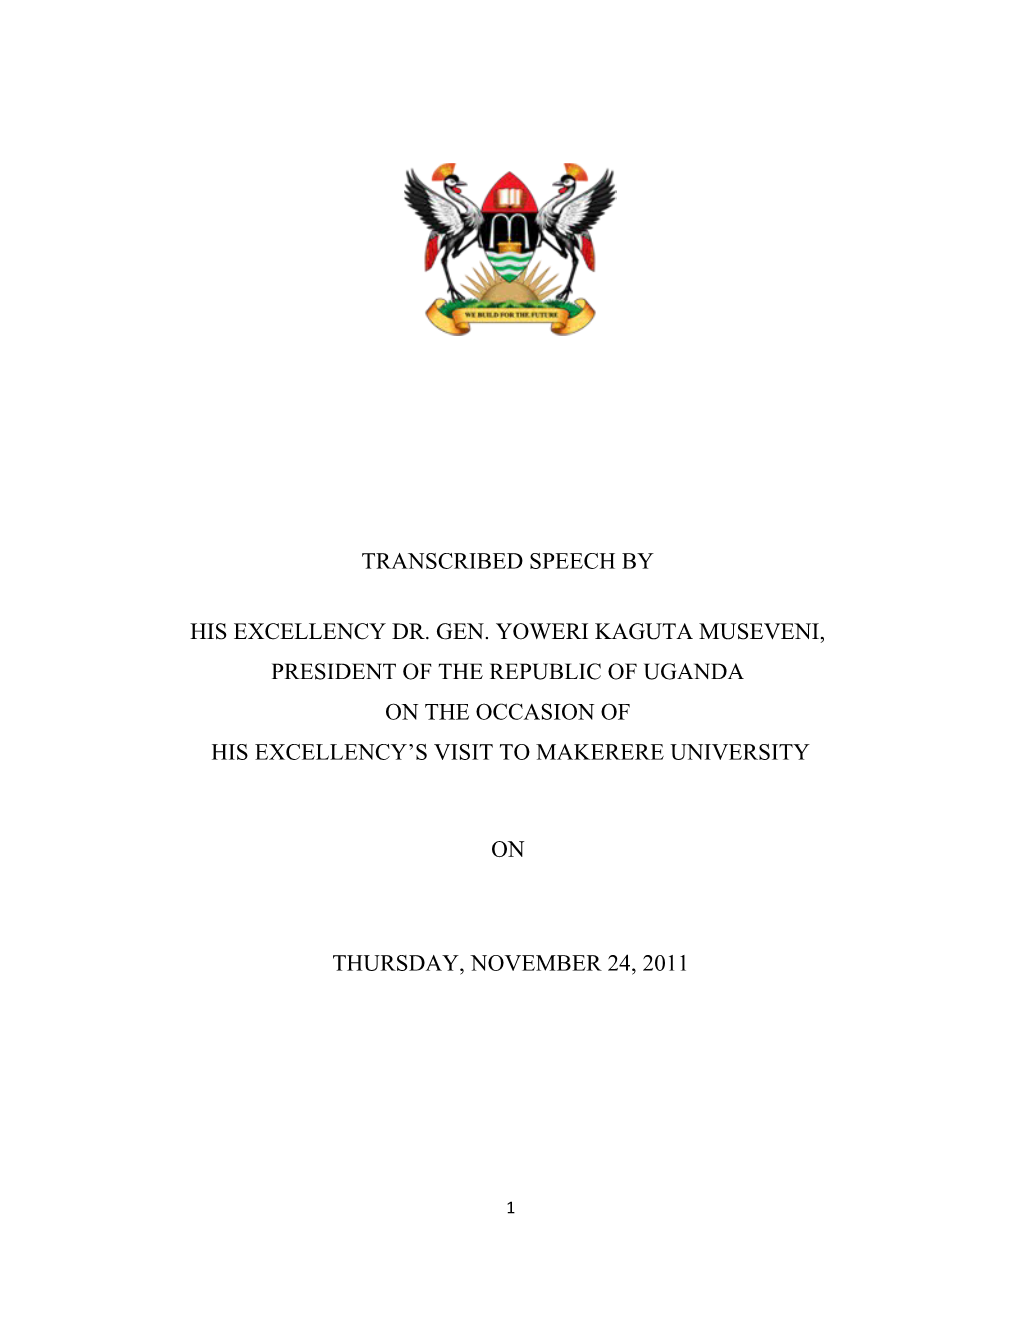 His Excellency Dr. Gen. Yoweri Kaguta Museveni